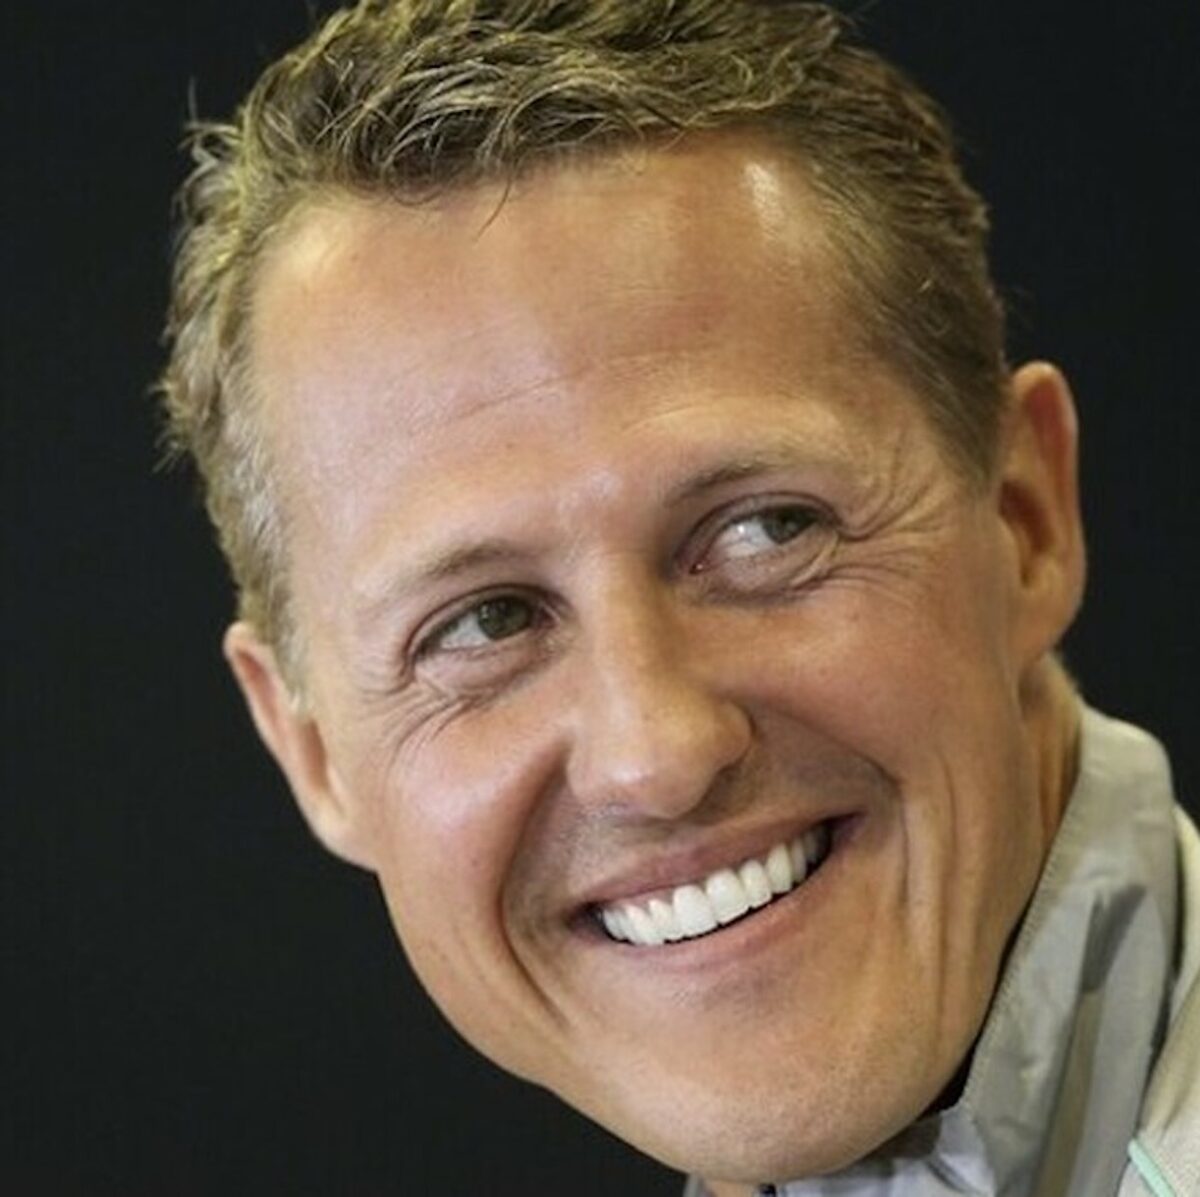 “Nessuna speranza”, la confessione choc su Michael Schumacher